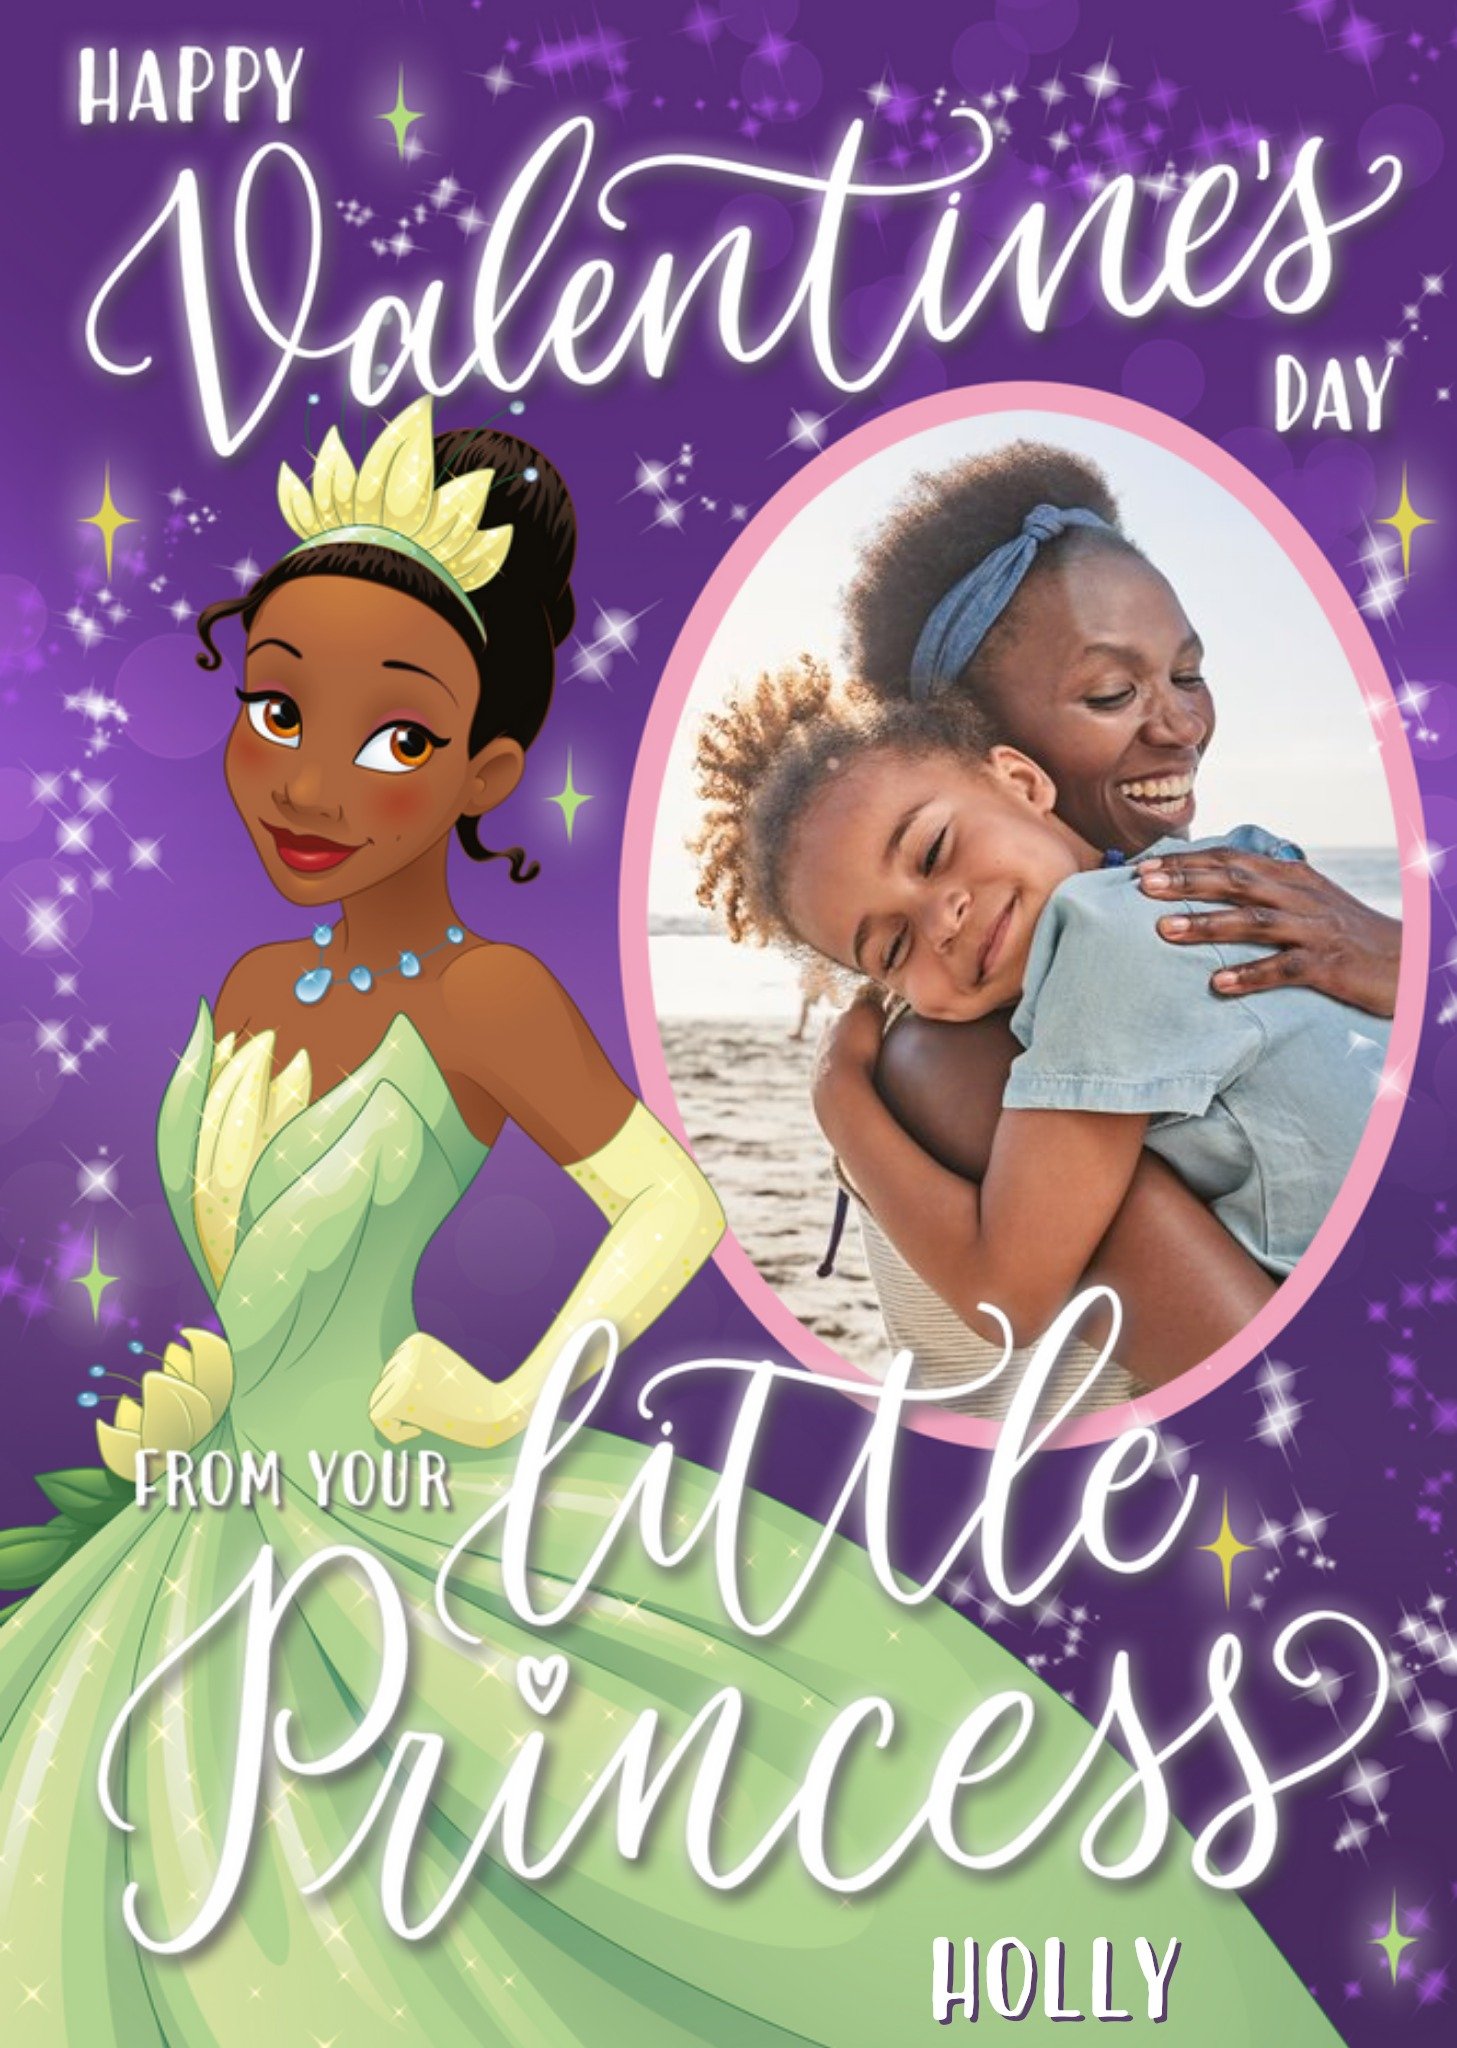 Disney Princess Tiana Photo Upload Valentine's Day Card Ecard